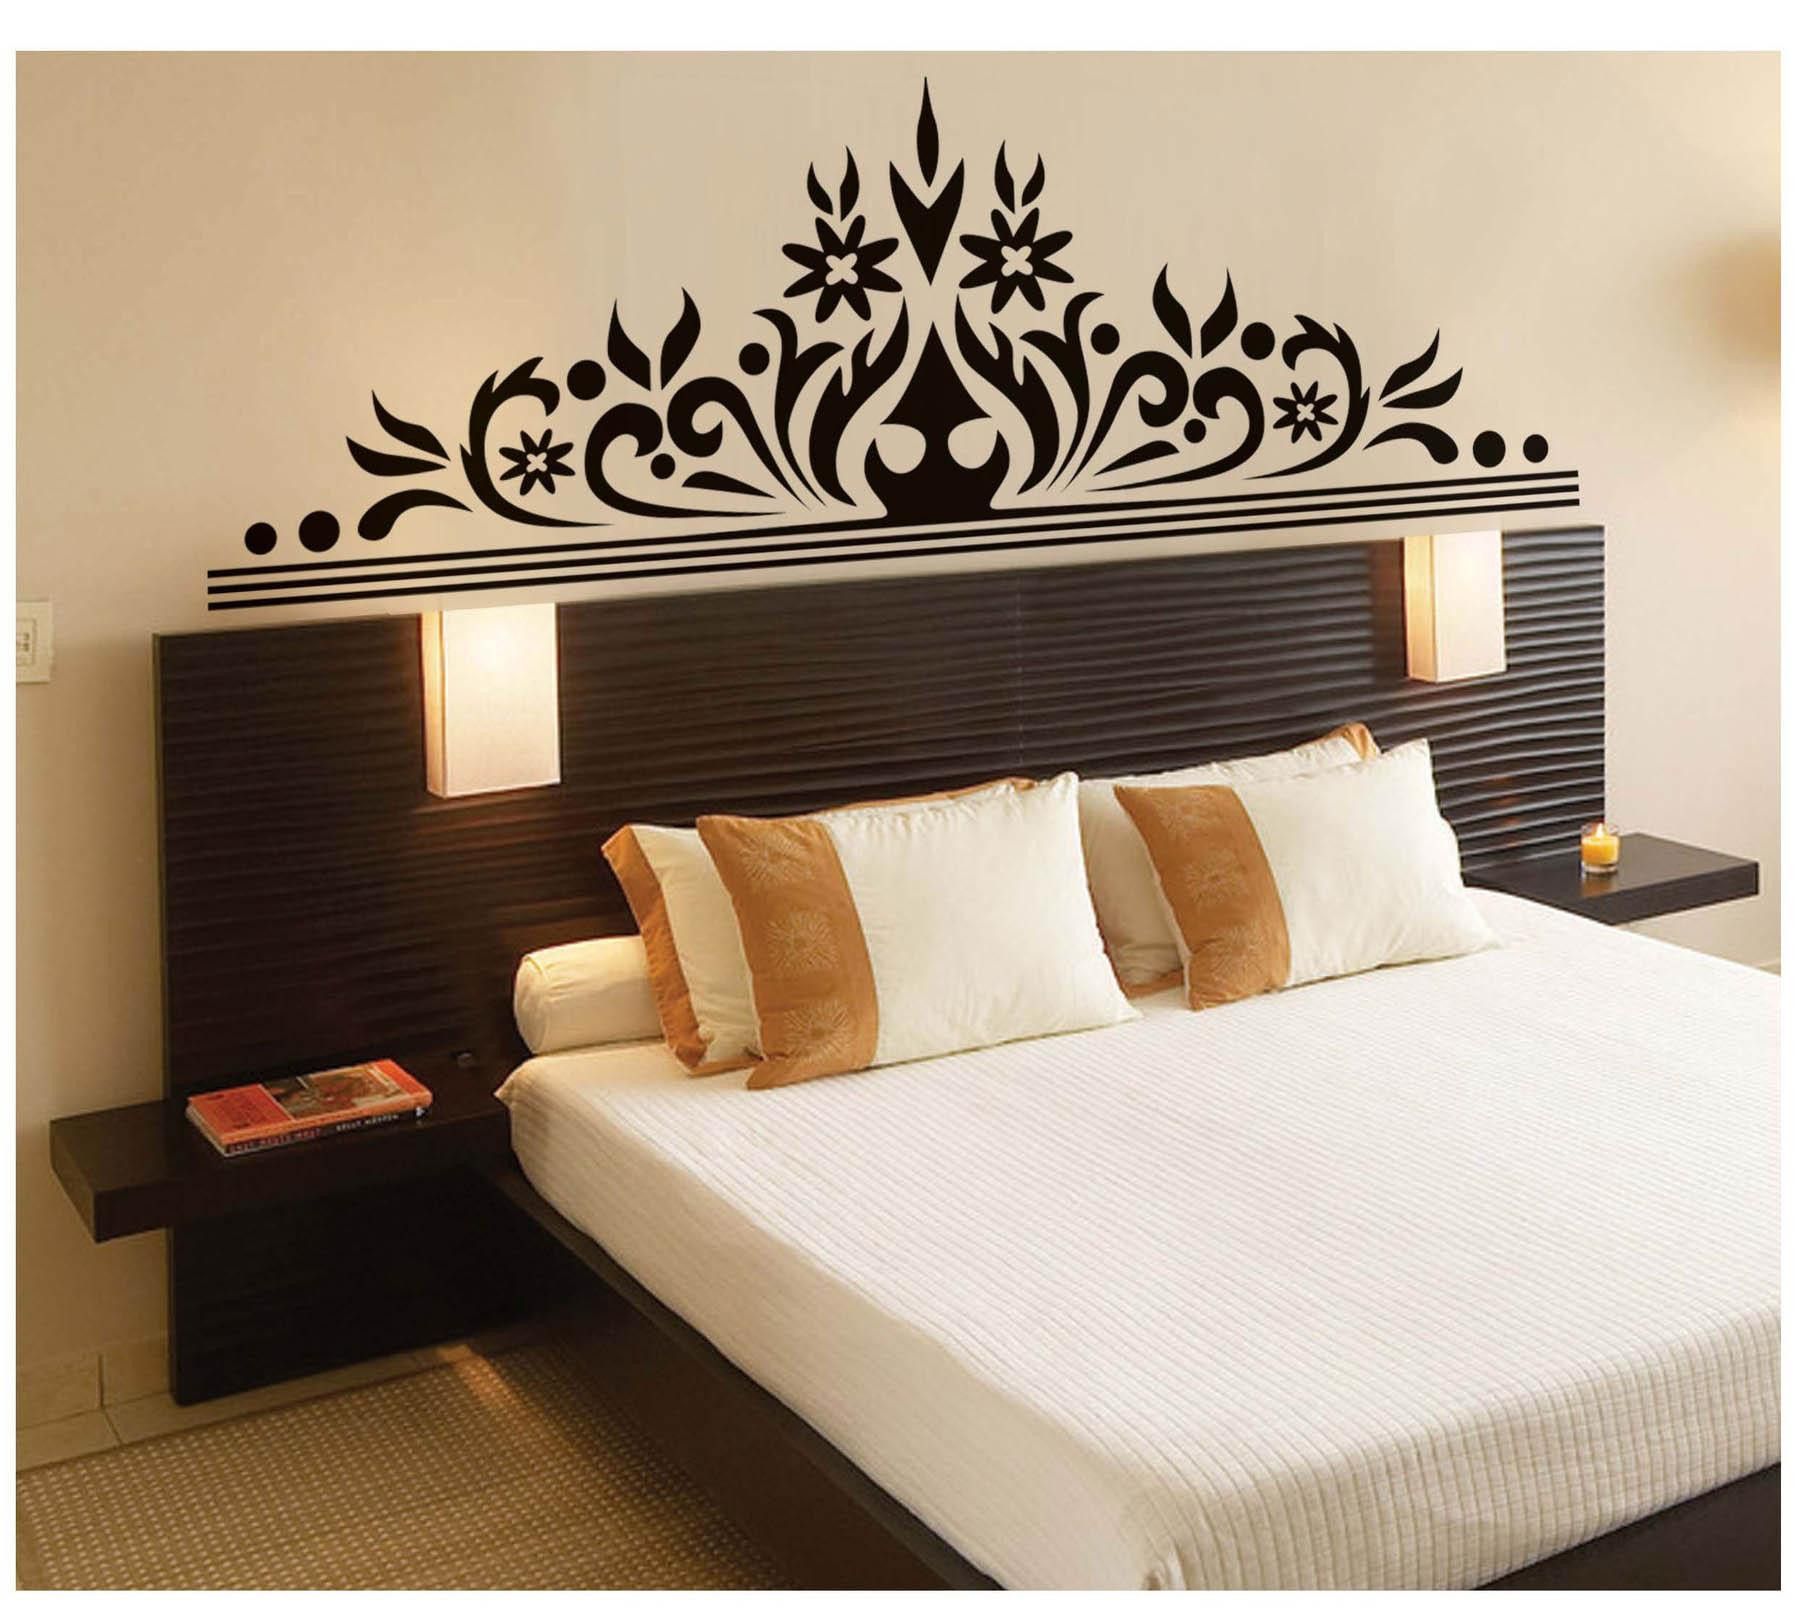 Wall Art Decals For Bedroom
 Bedroom Wall Art Decal Sticker Headboard Wall Decoration